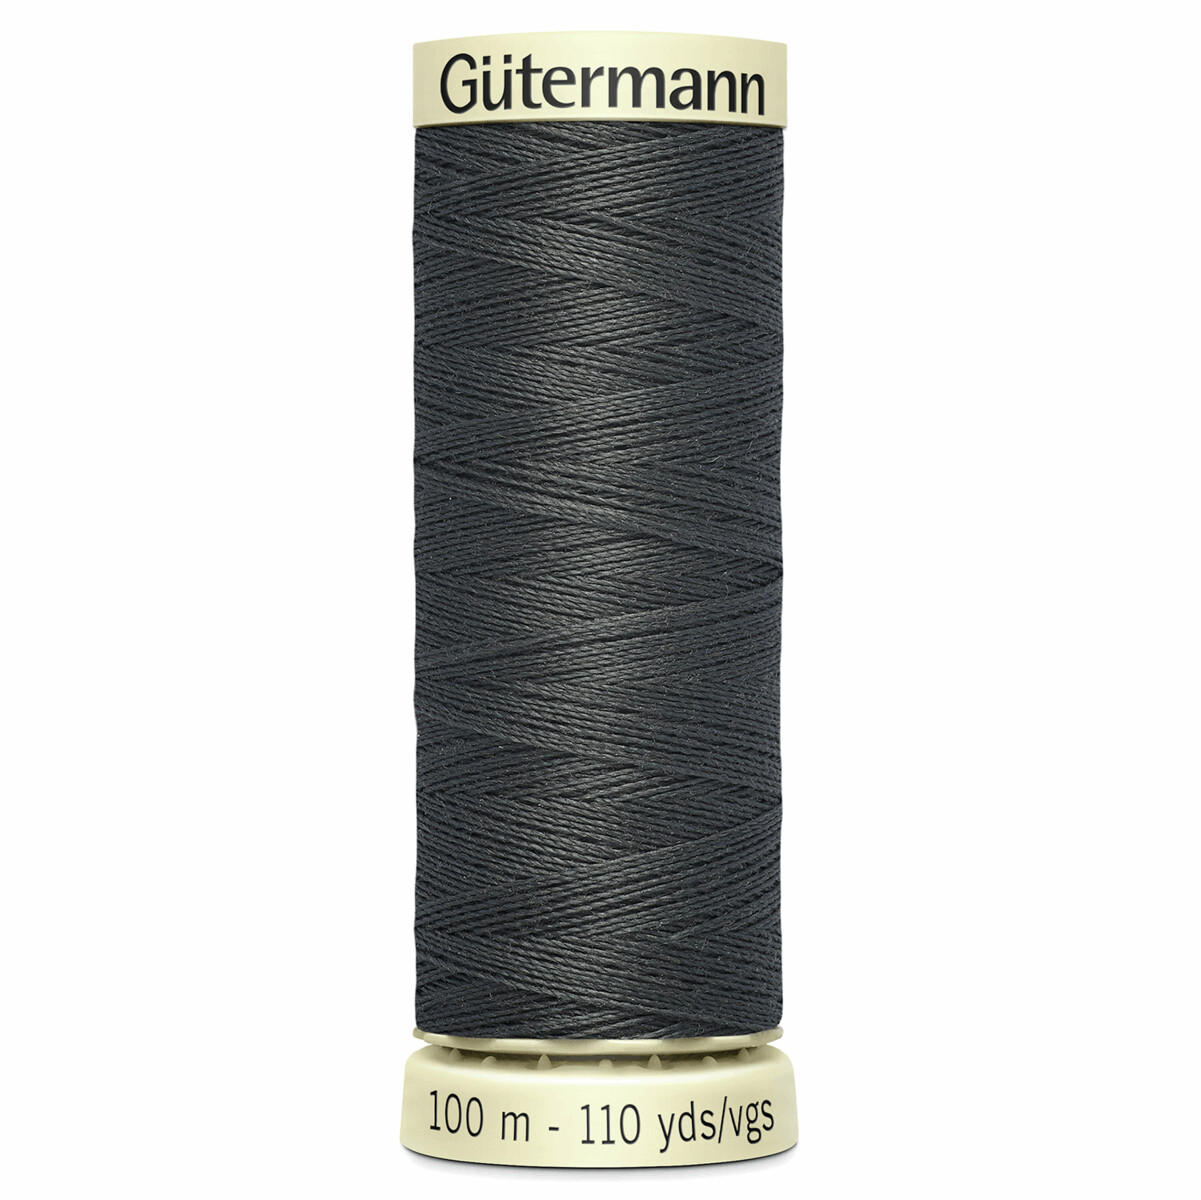 Gutermann Sew-All thread 36